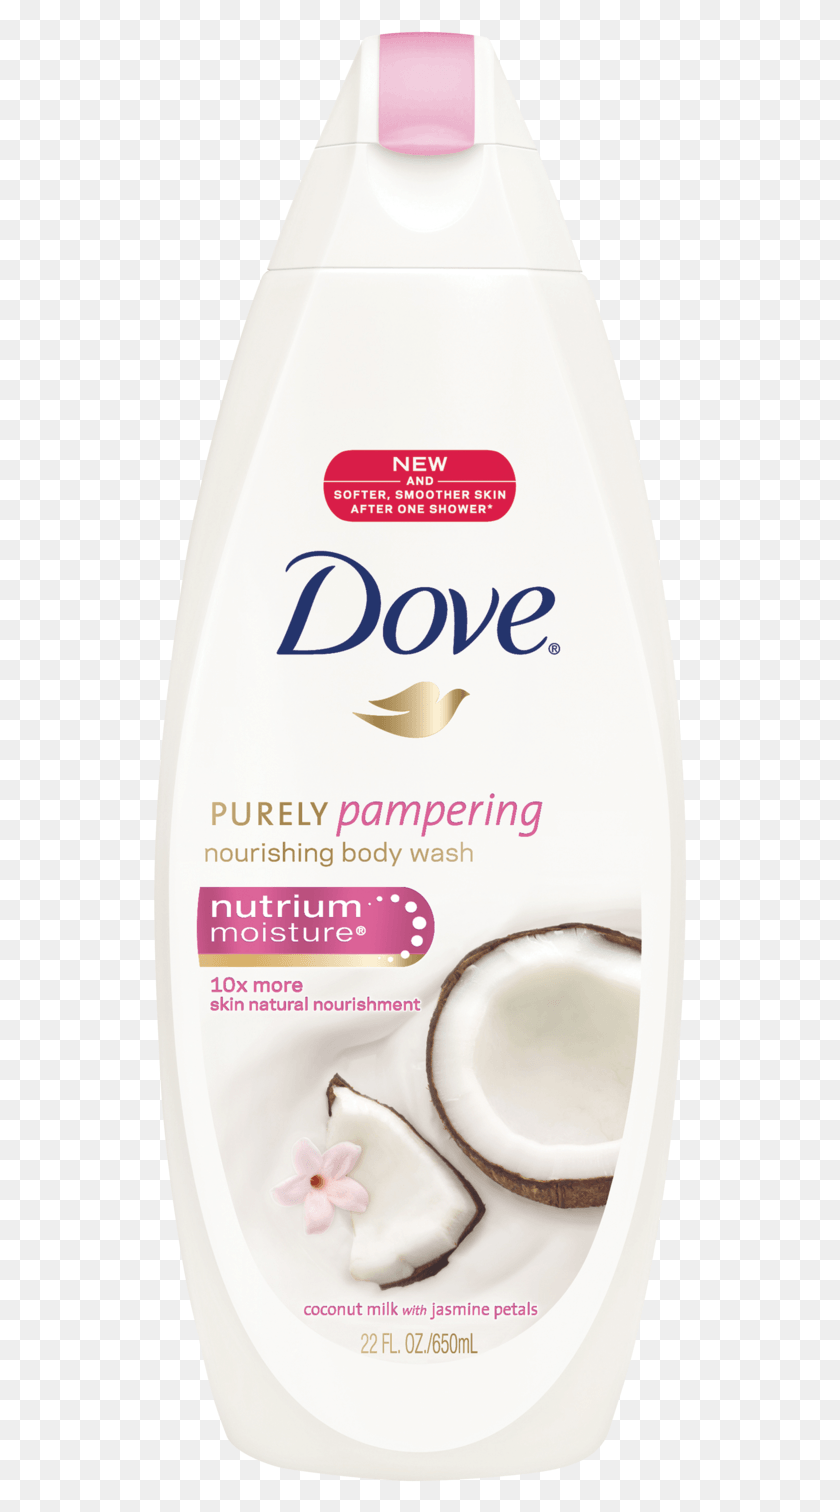 535x1452 Dove Purely Pampering Coconut Milk С Лепестками Жасмина, Бутылка, Орех, Овощи Png Скачать